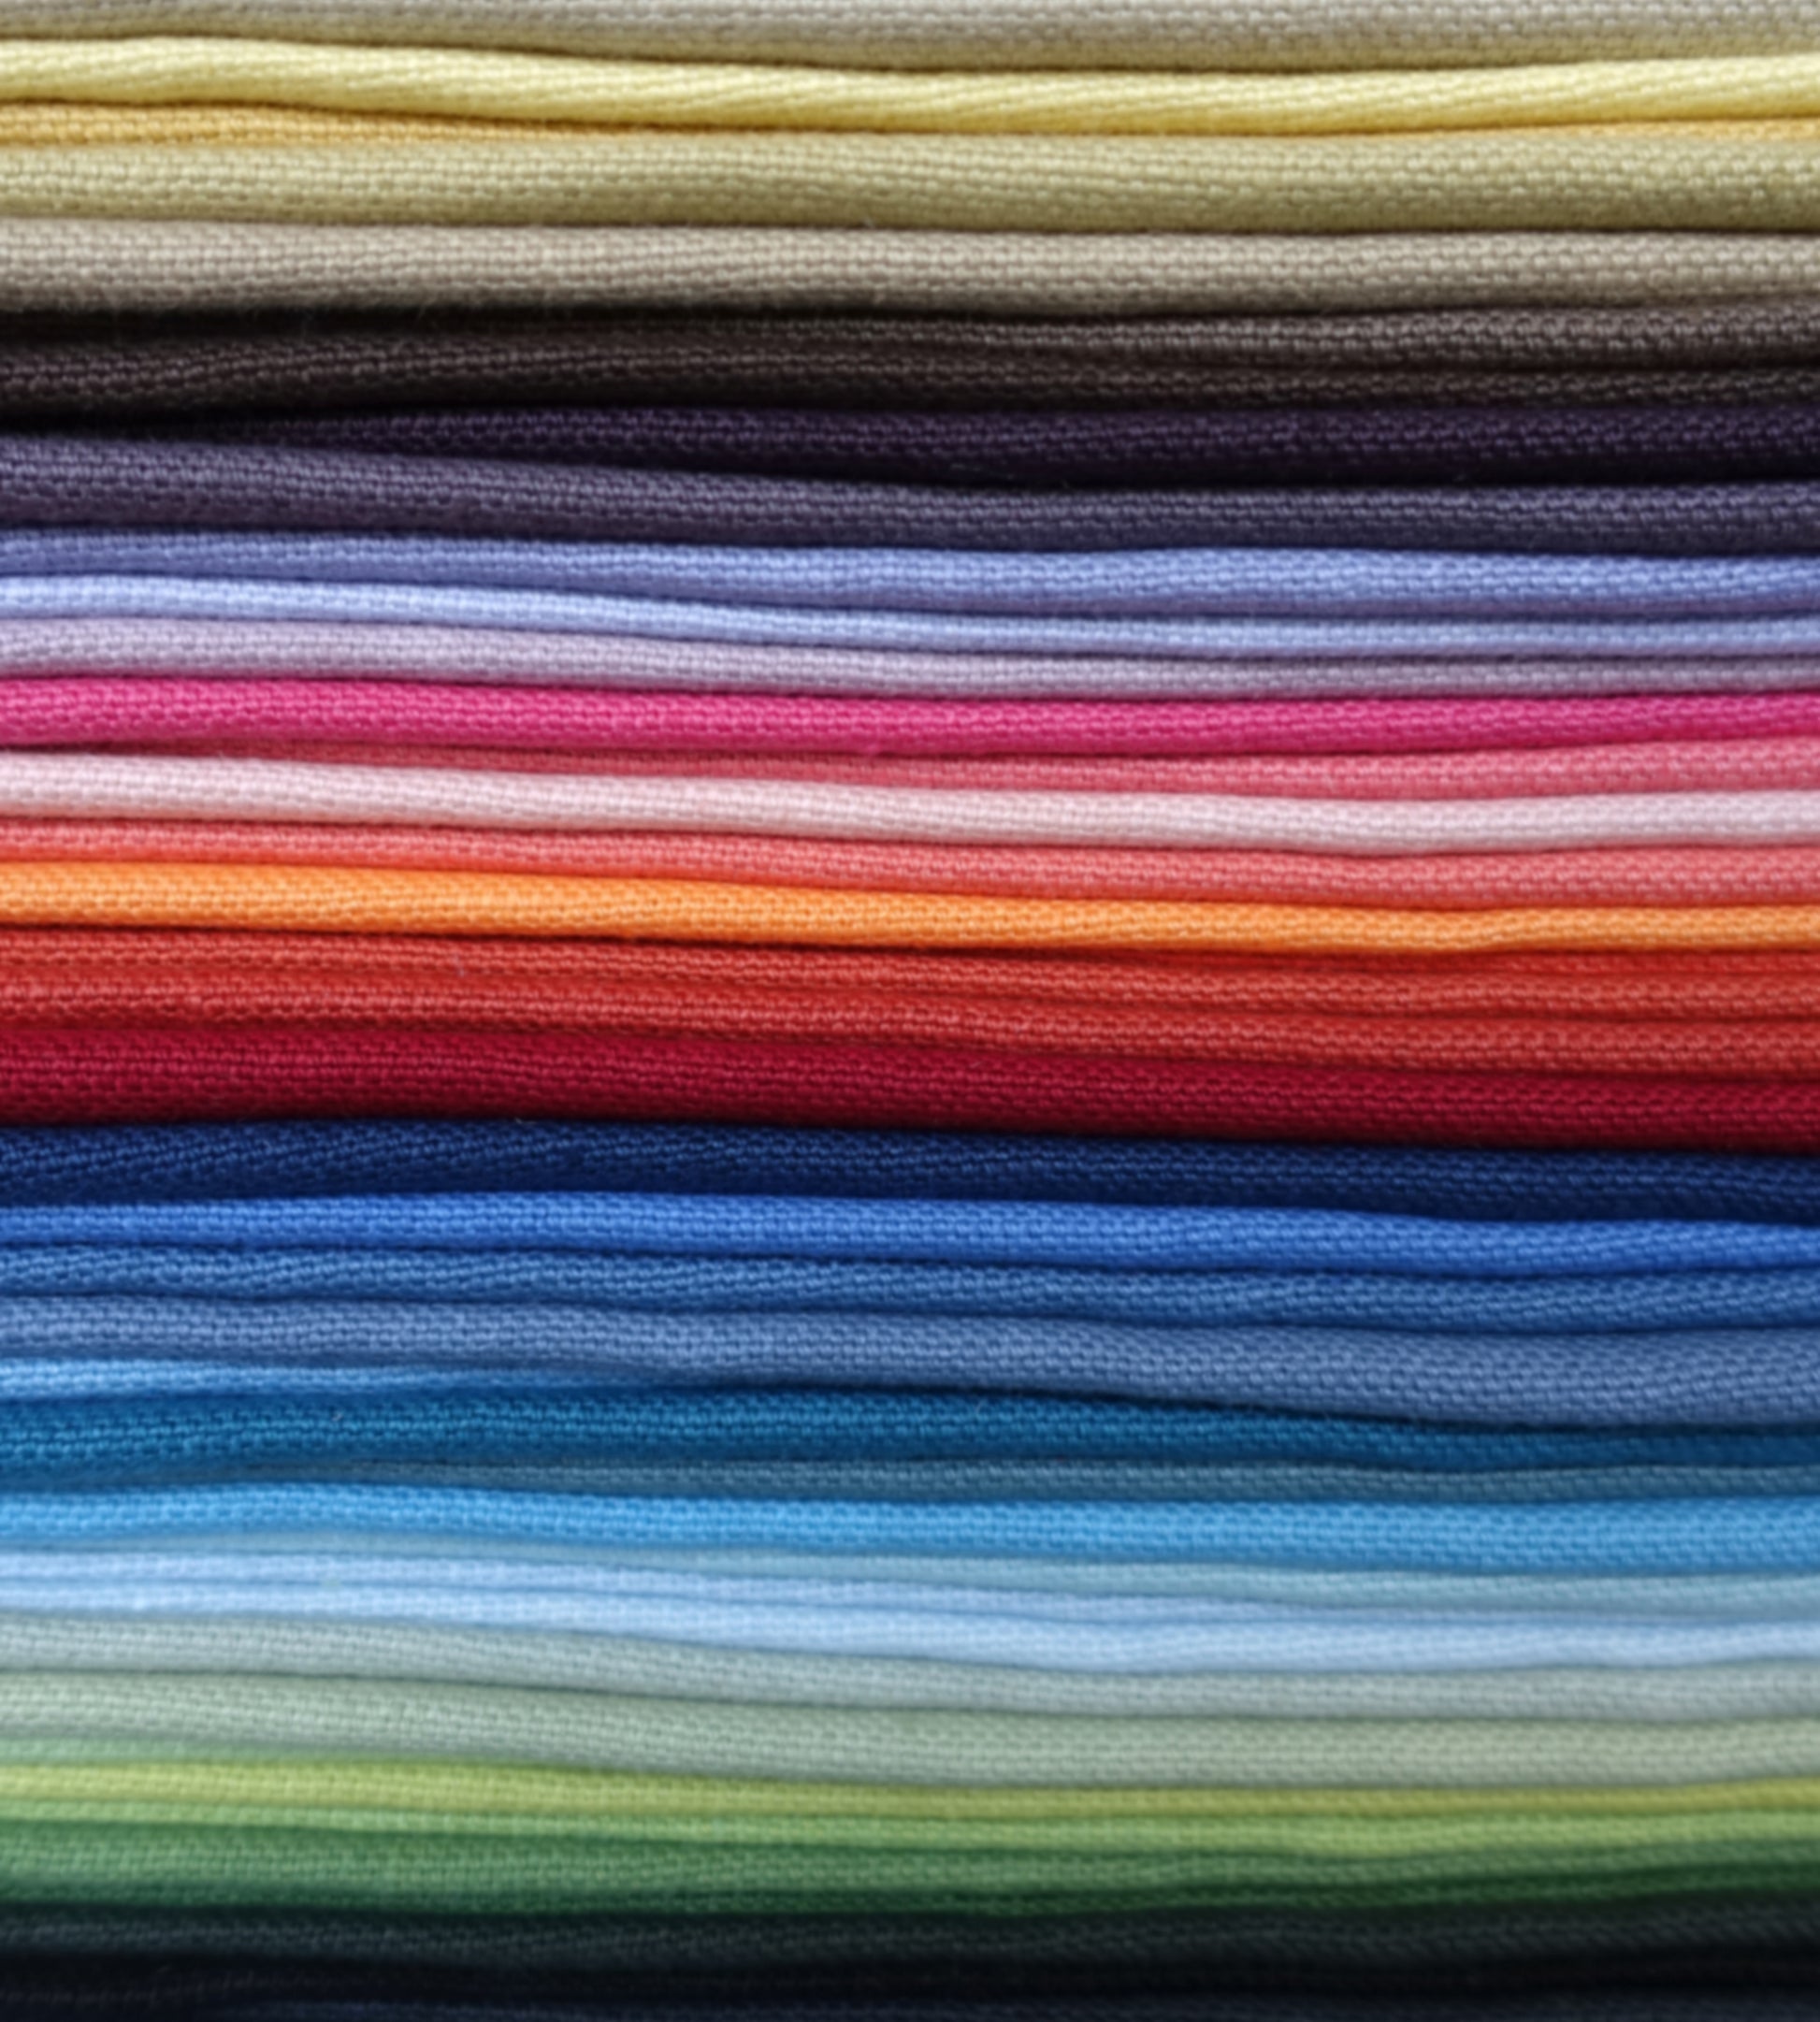 Purchase Scalamandre Fabric Pattern number SC 005927108, Toscana Linen Bluestone 2